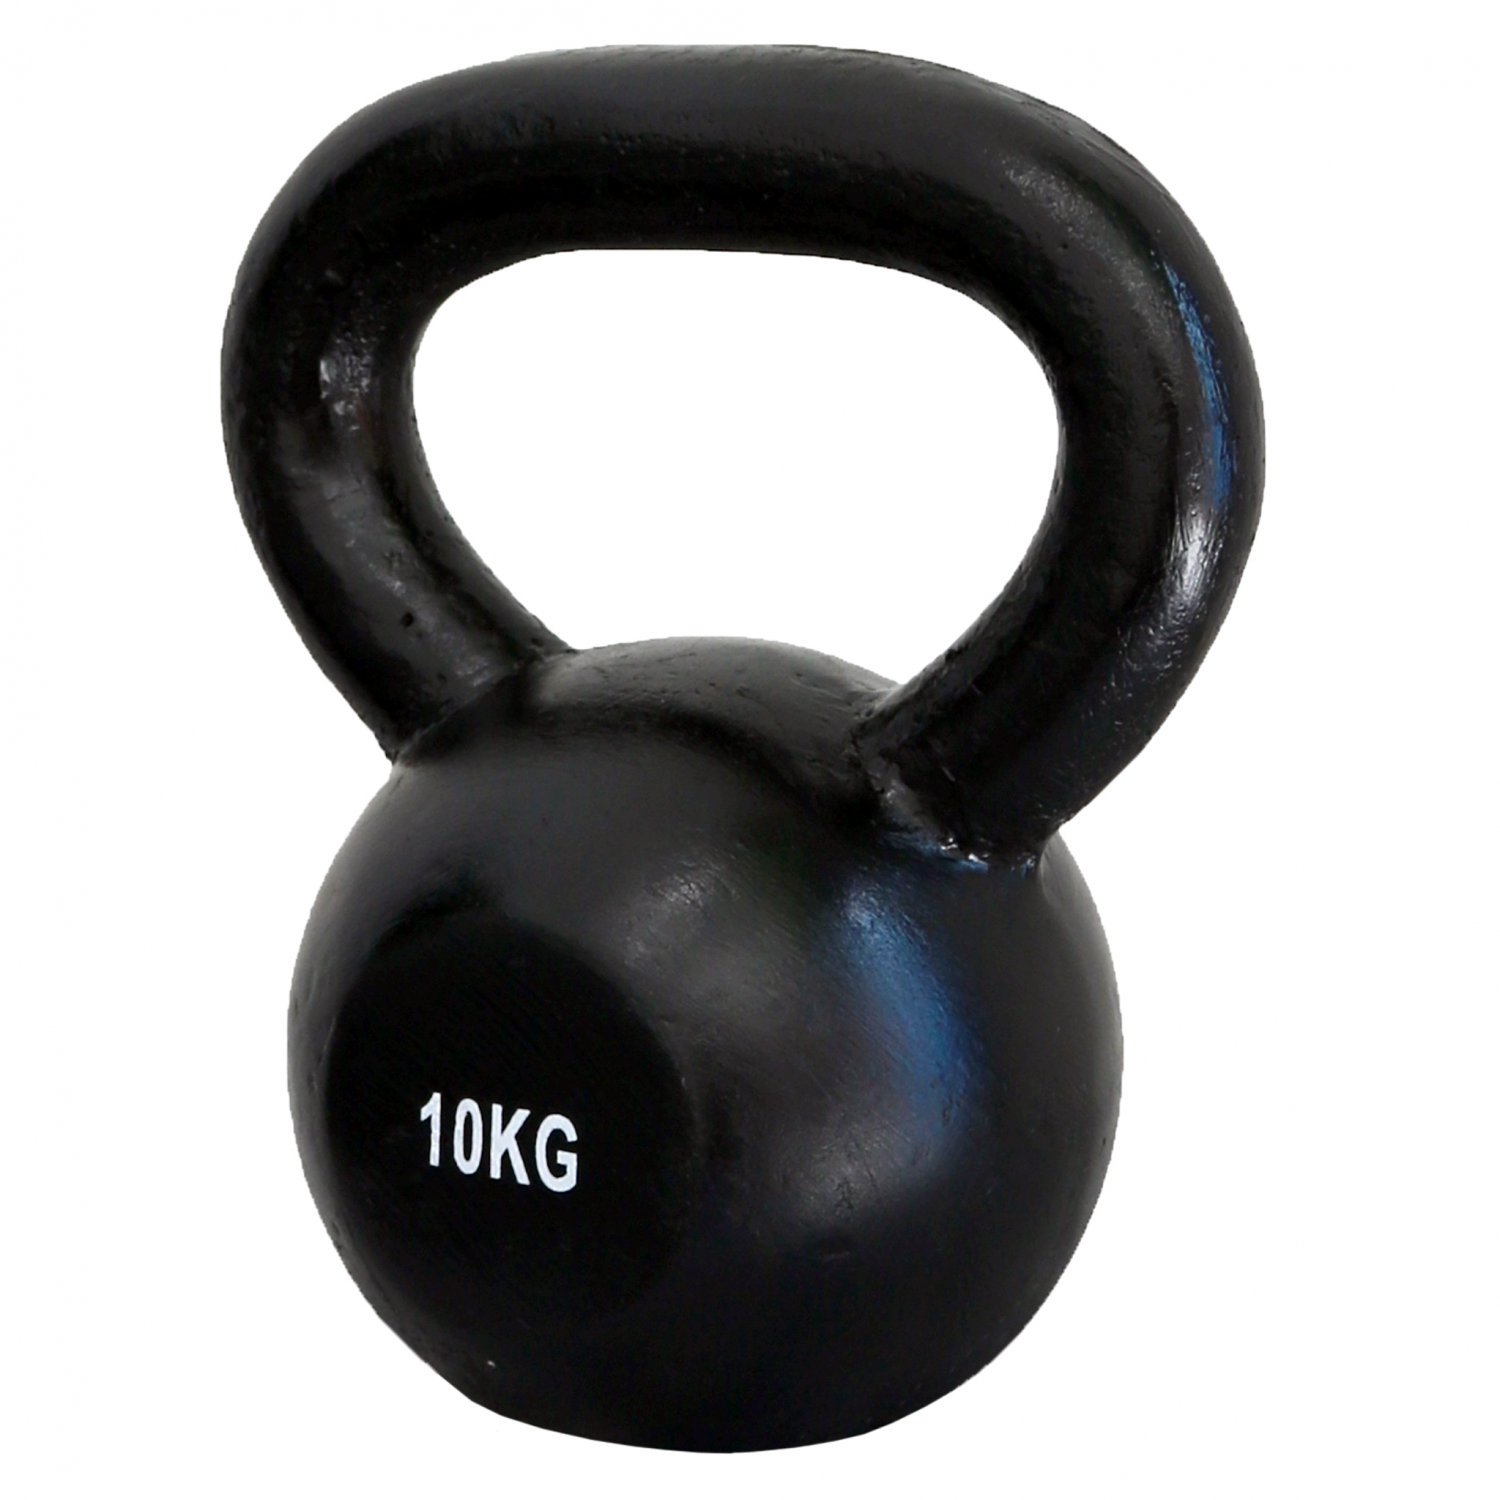 10kg Cast Iron Kettlebell Weight Training Fitness Workout Gym